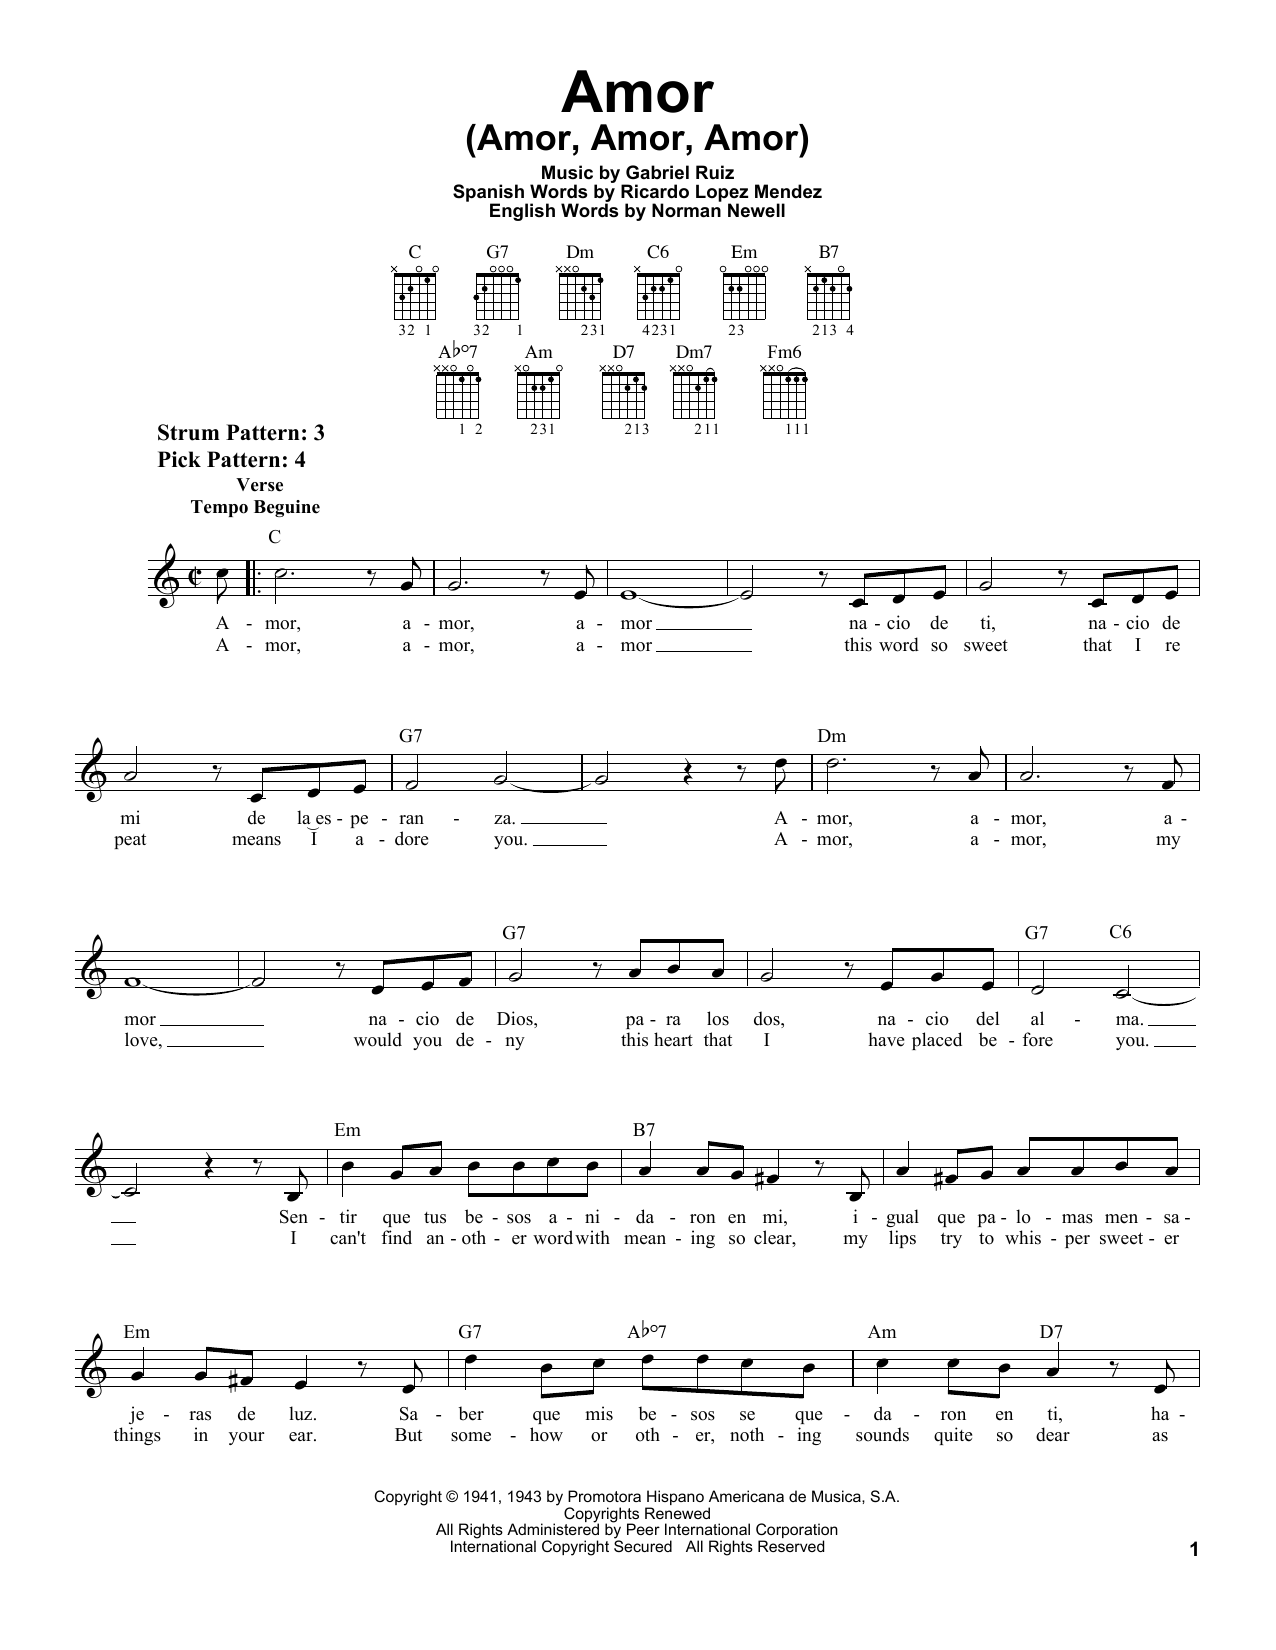 Gabriel Ruiz Amor (Amor, Amor, Amor) Sheet Music Notes & Chords for Real Book - Melody & Chords - C Instruments - Download or Print PDF